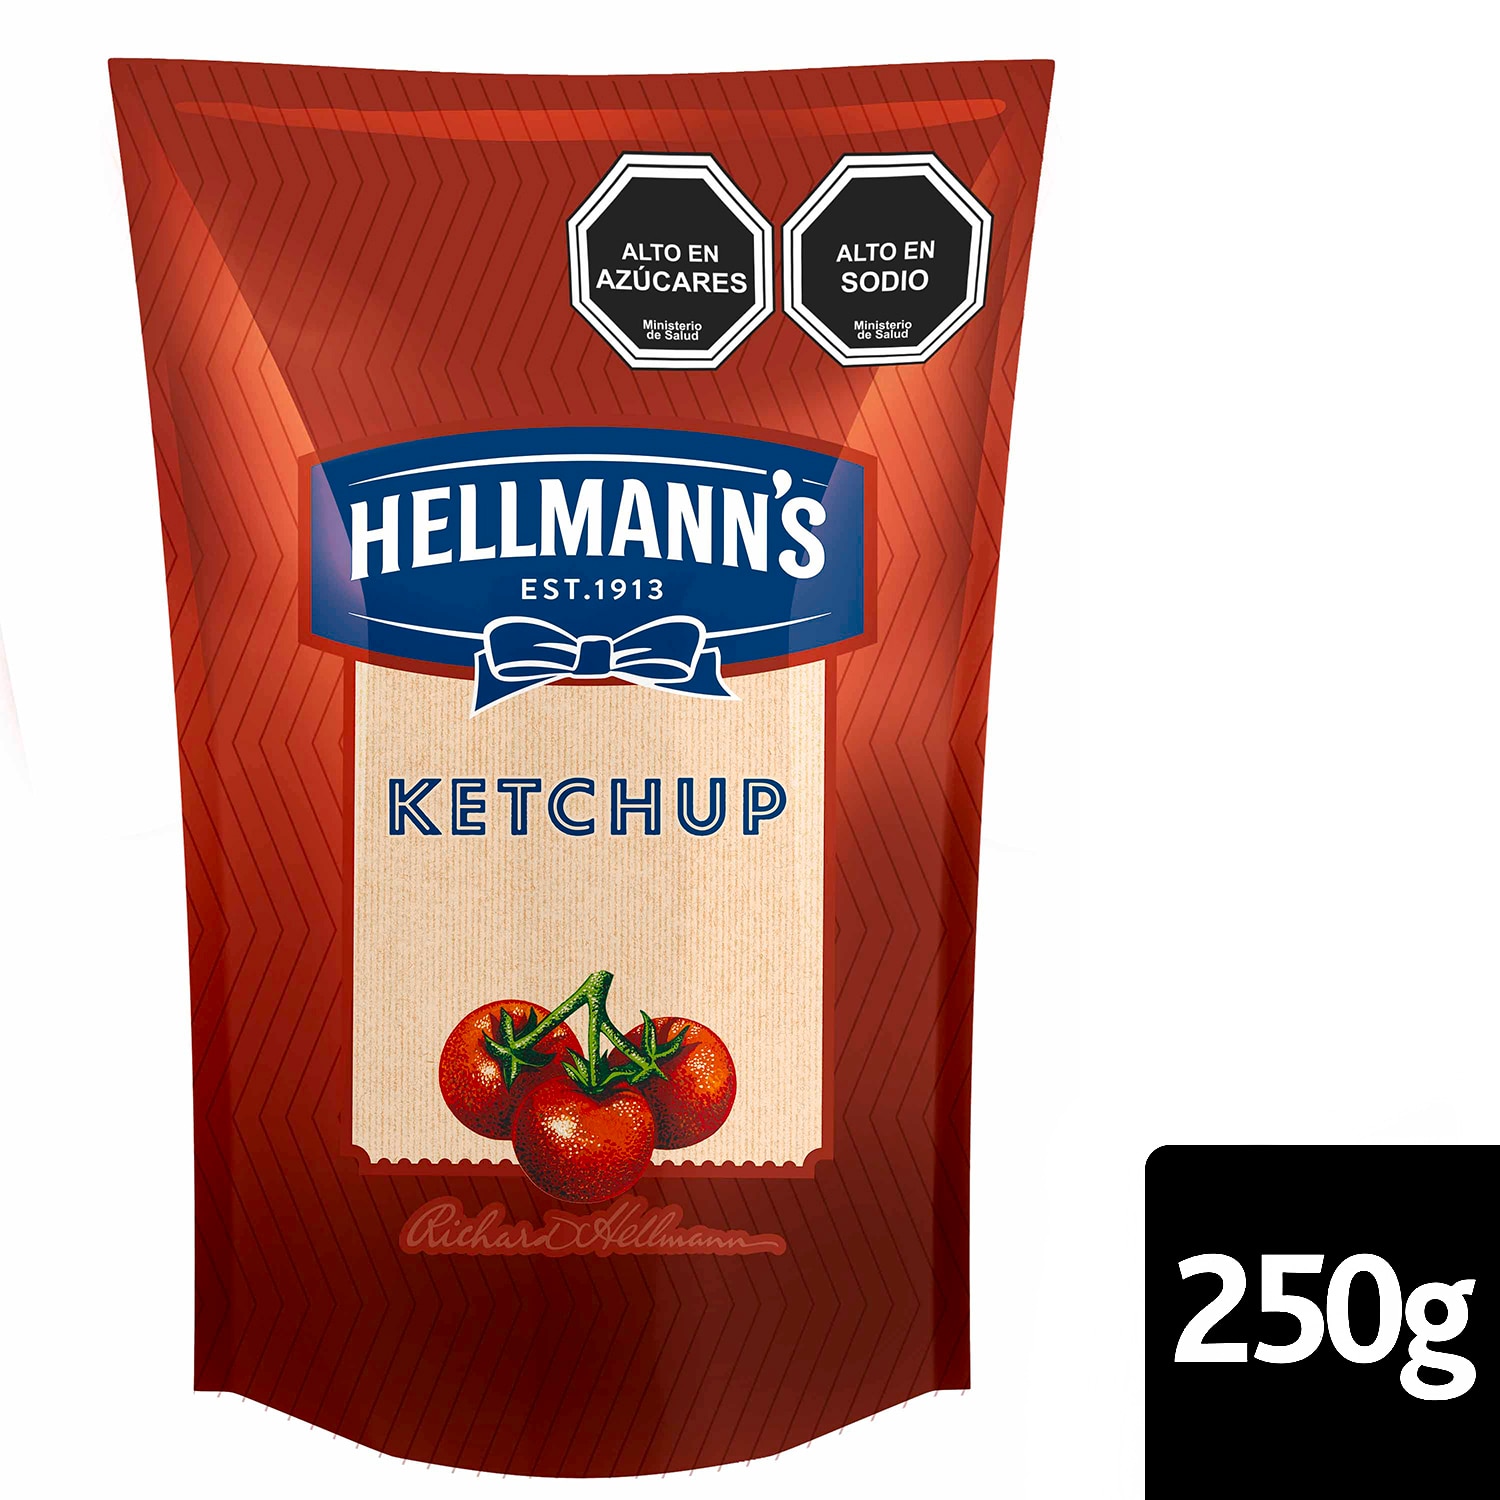 Imagen de envase de Ketchup Hellmann's Doypack